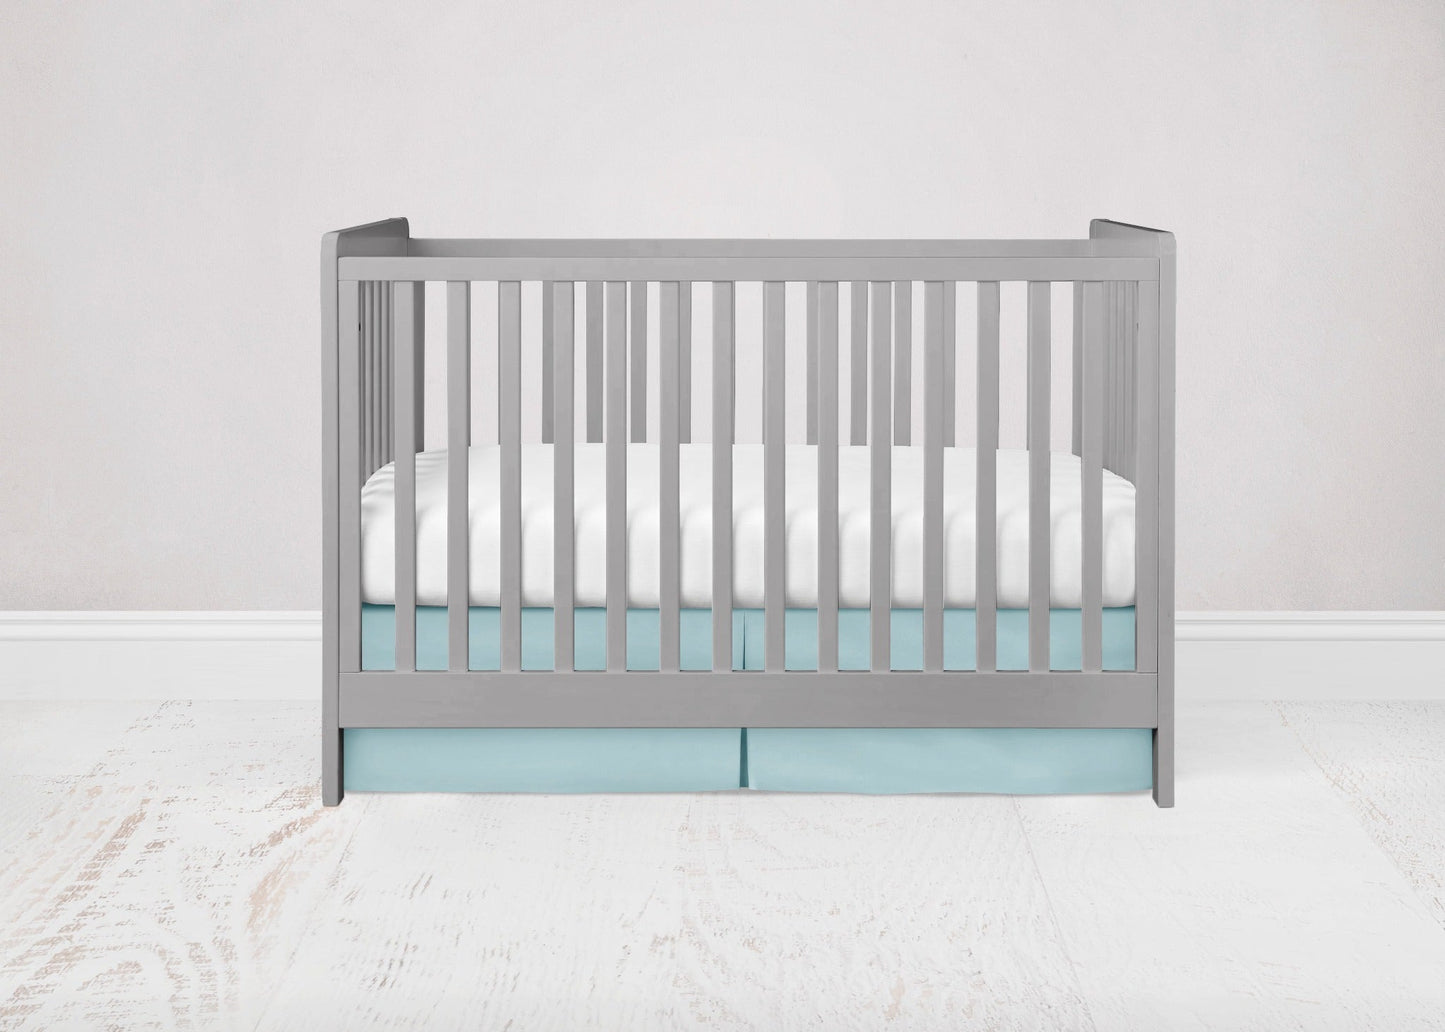 Mini Crib Bedding Sets, Crib Rail Cover for Teething, Aqua Nursery Boy - The Creative Raccoon